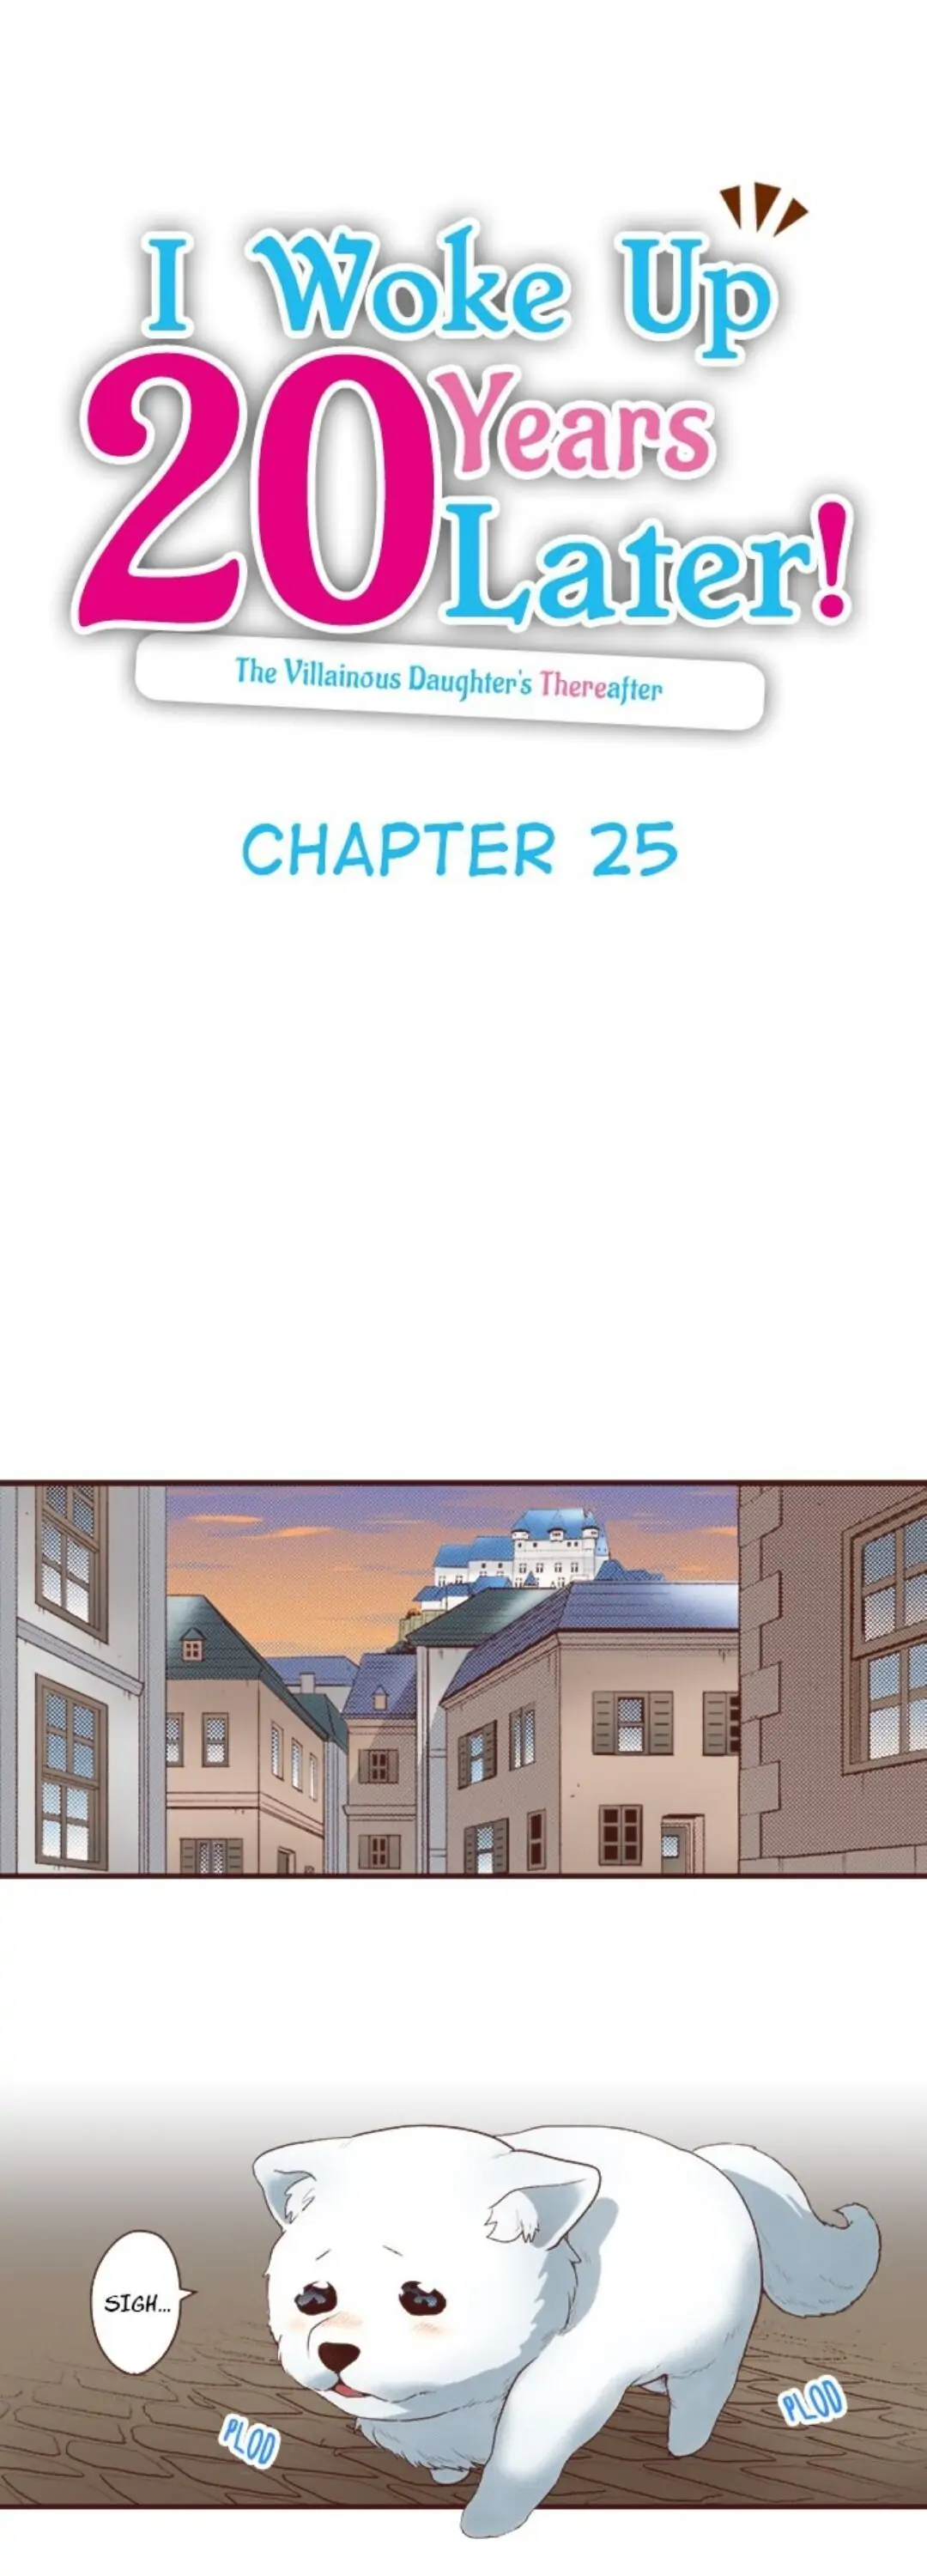 I Woke Up 20 Years Later! chapter 25